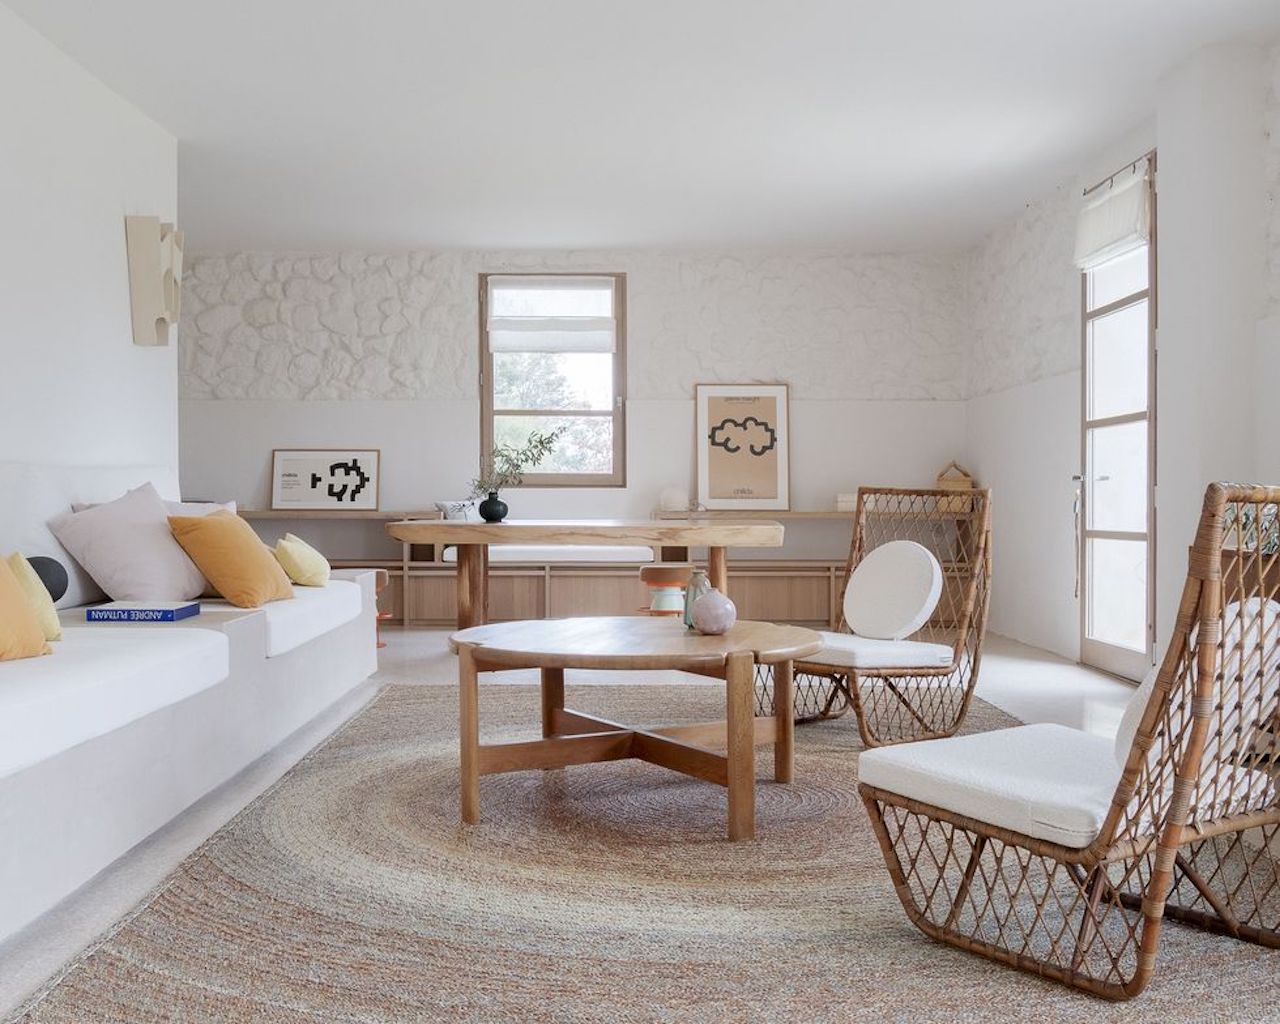 Japanese interior design rugs wooden furniture